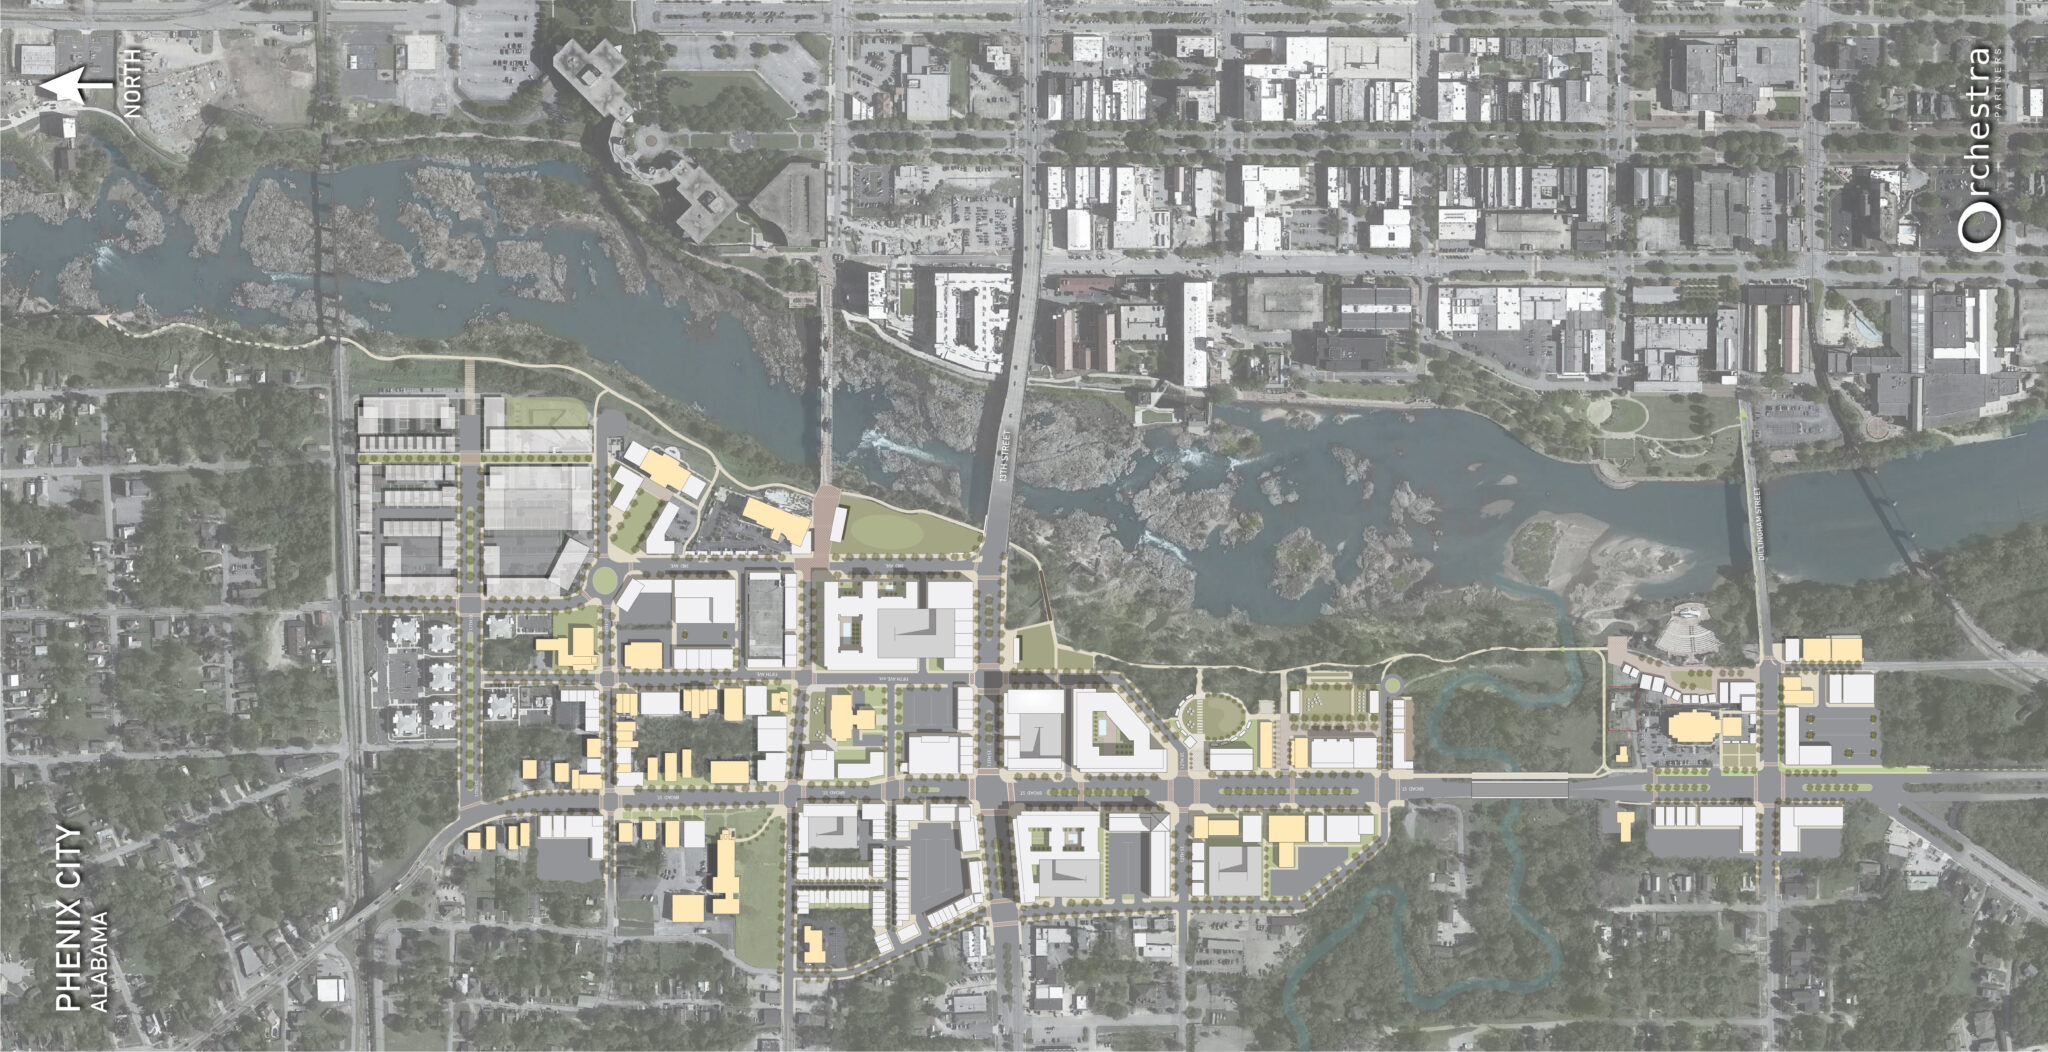 Phenix City Vision Plan